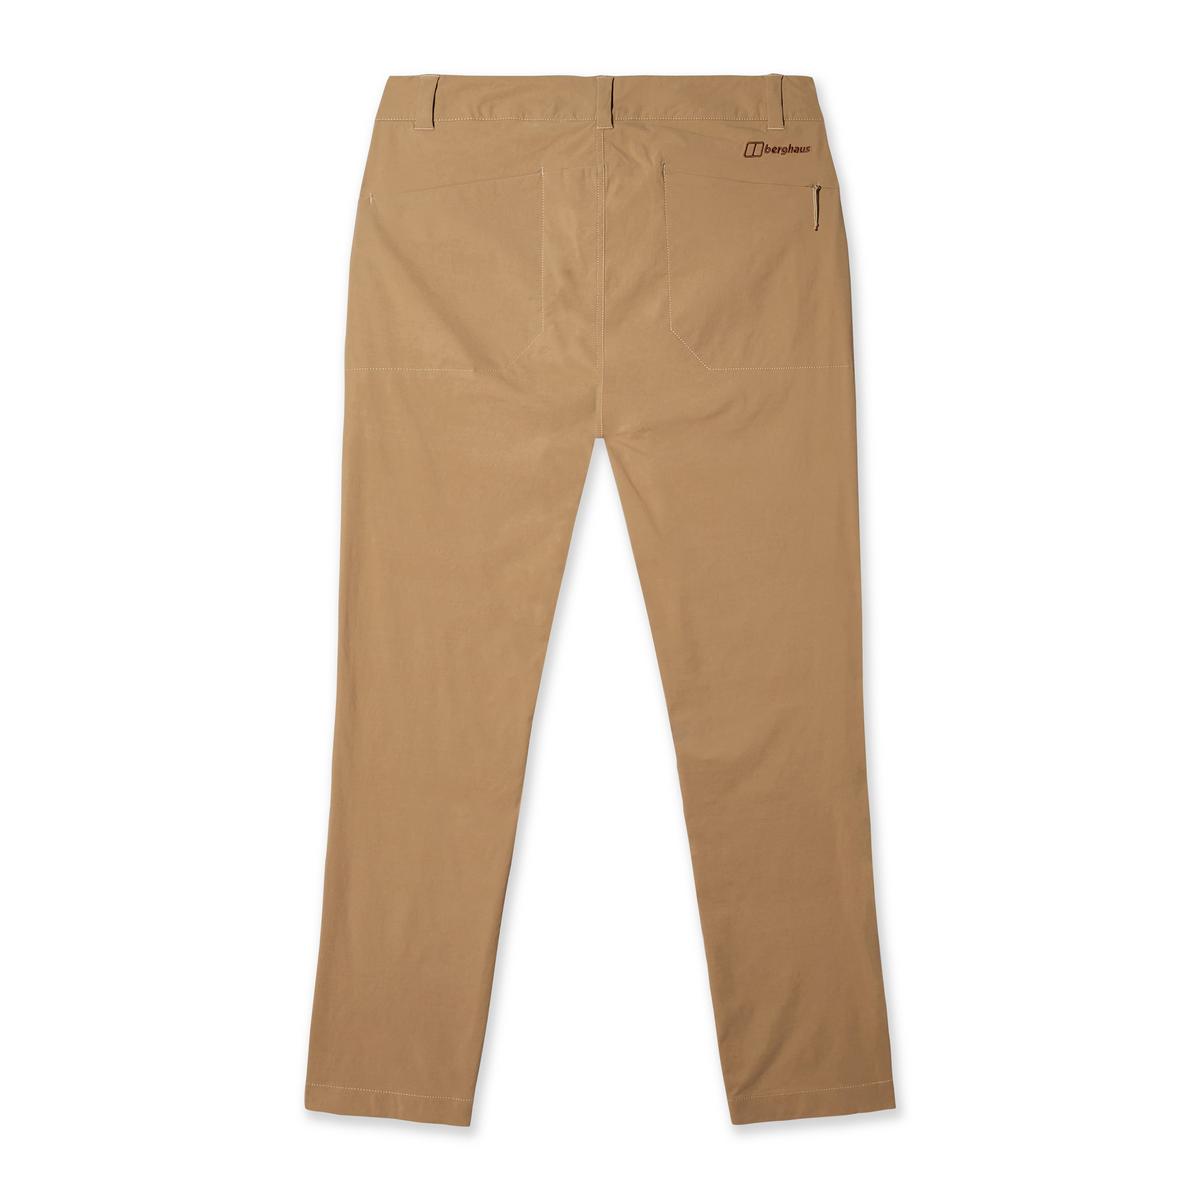 Berghaus Men's Everyday Pants - Brown